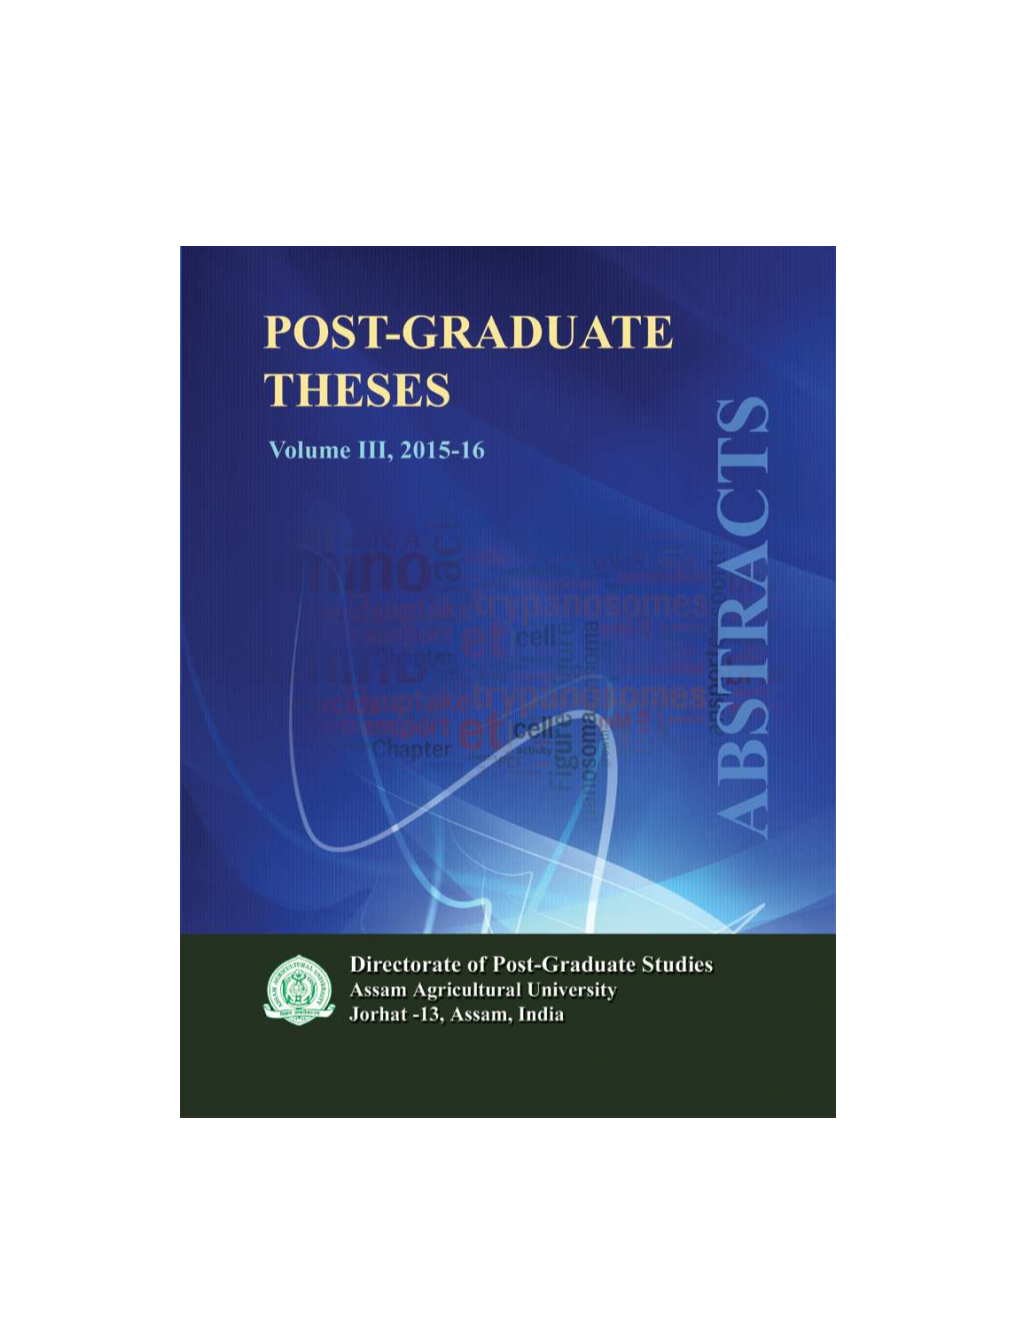 Post-Graduate Thesis Volume III, 2015-16